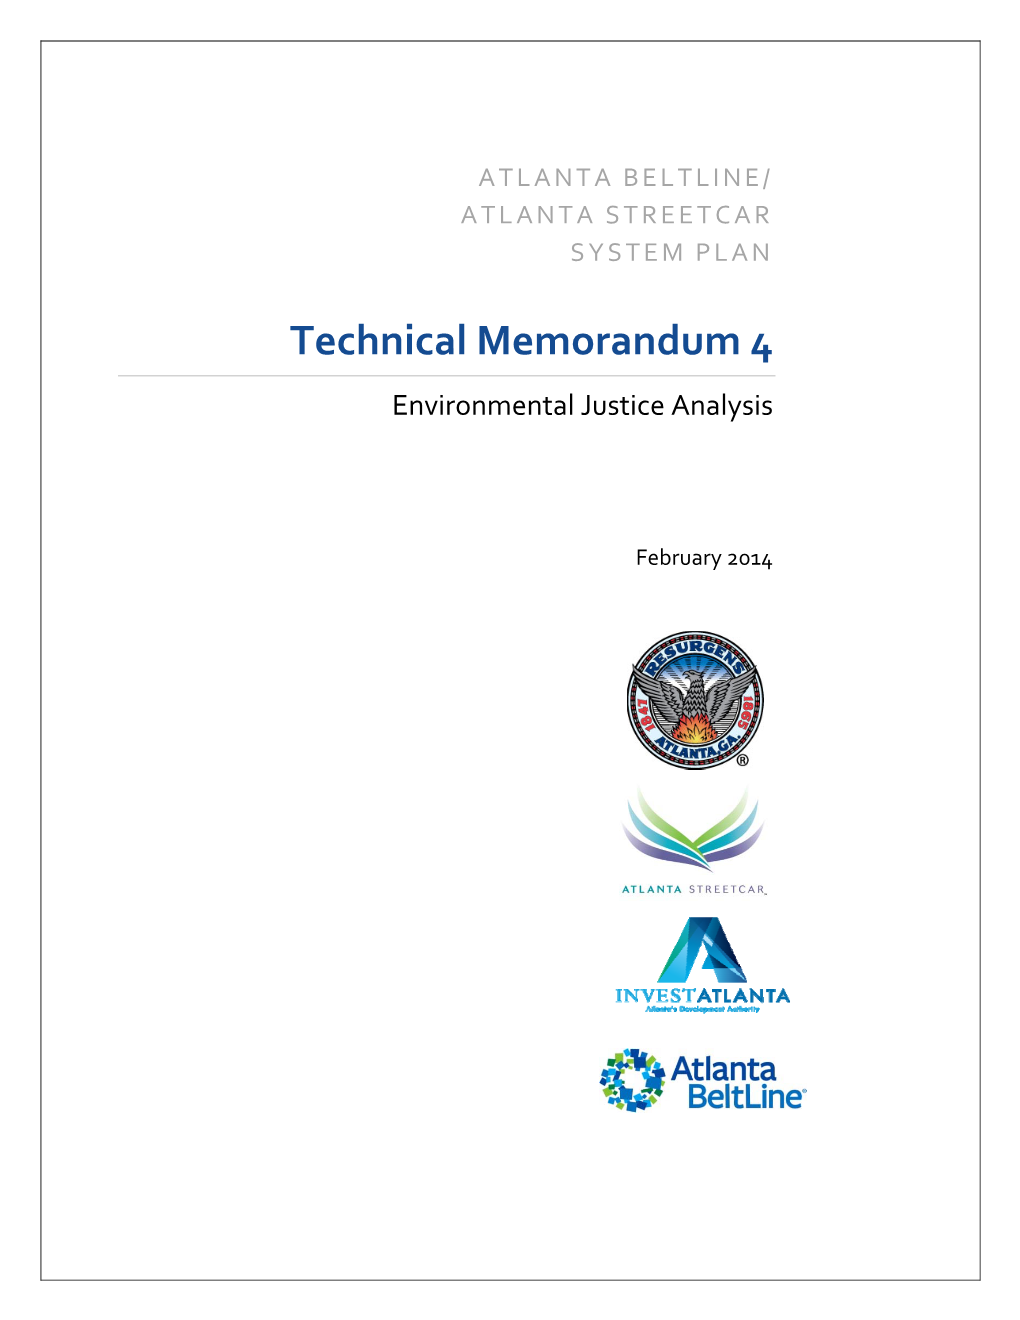 Technical Memorandum 4 Environmental Justice Analysis